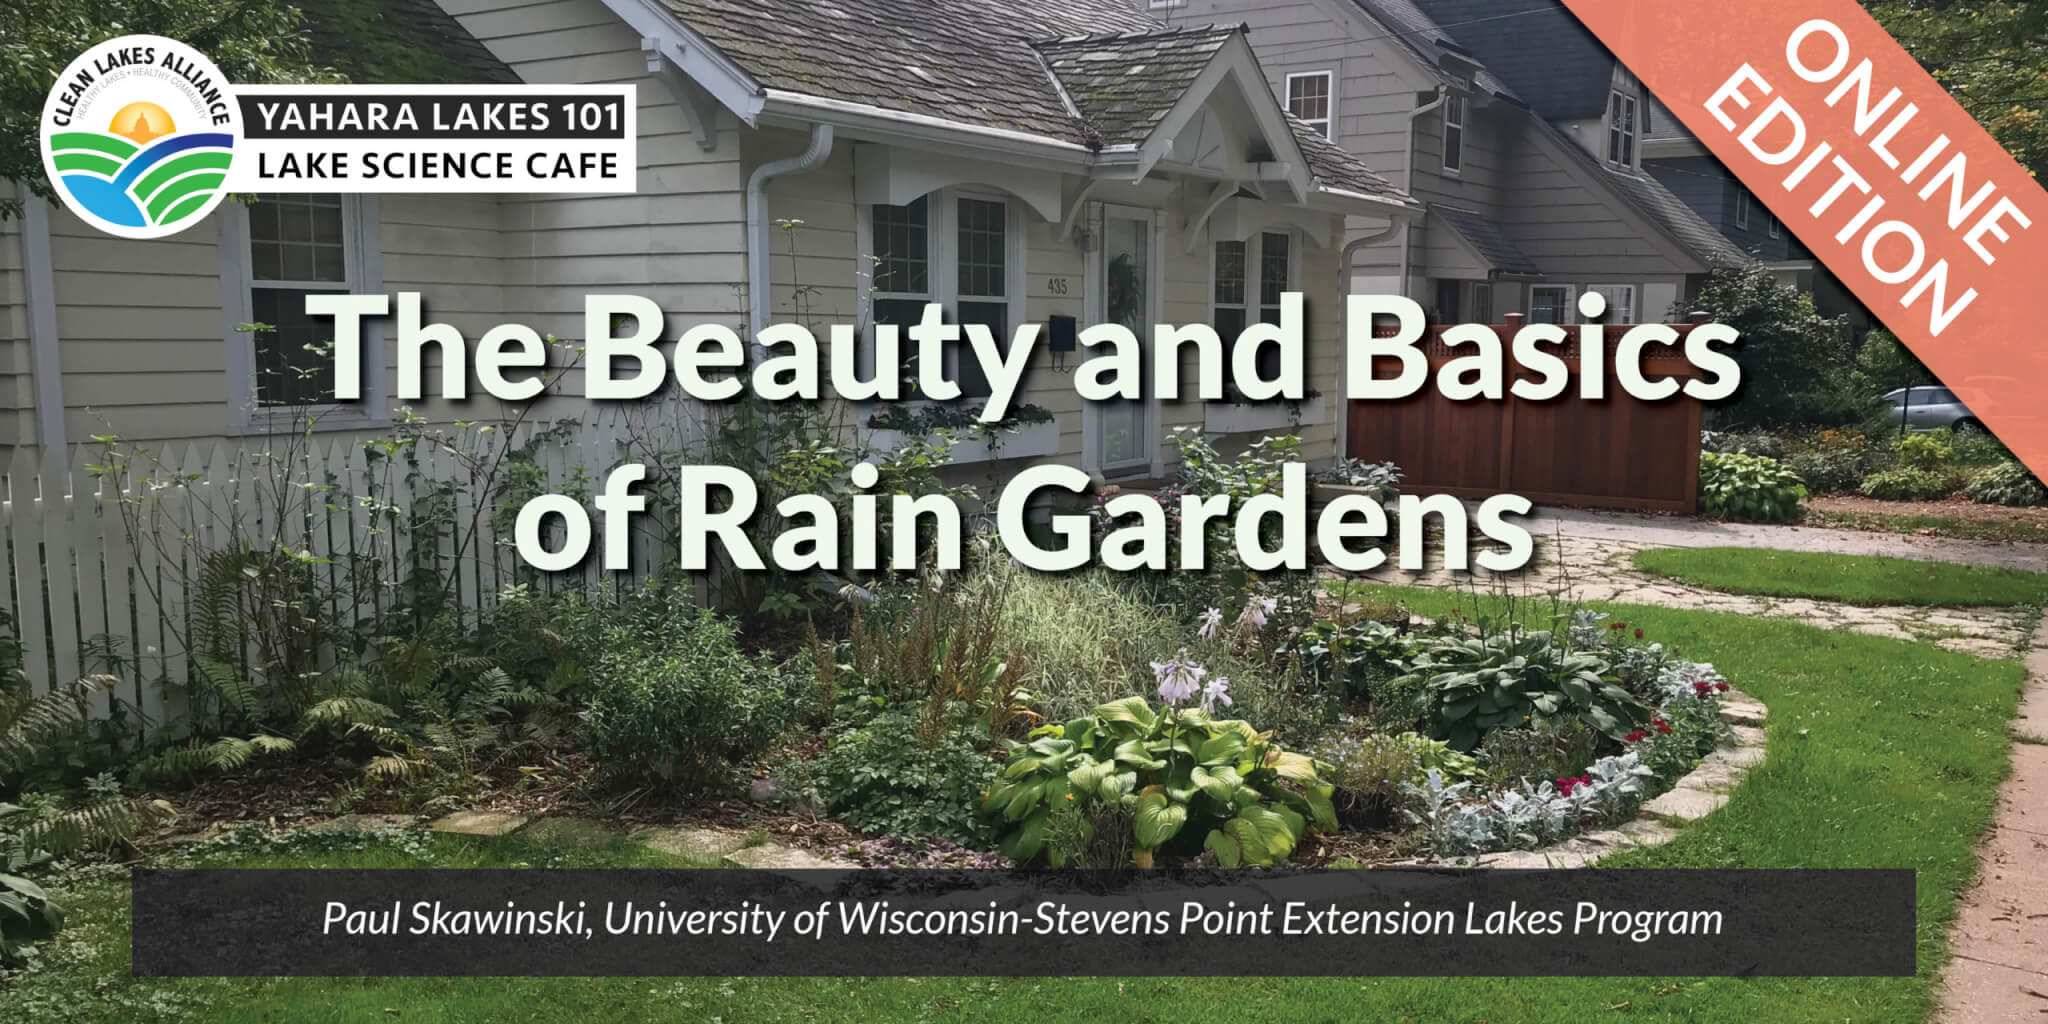 Yahara Lakes 101: The Beauty and Basics of Rain Gardens (Online Edition)